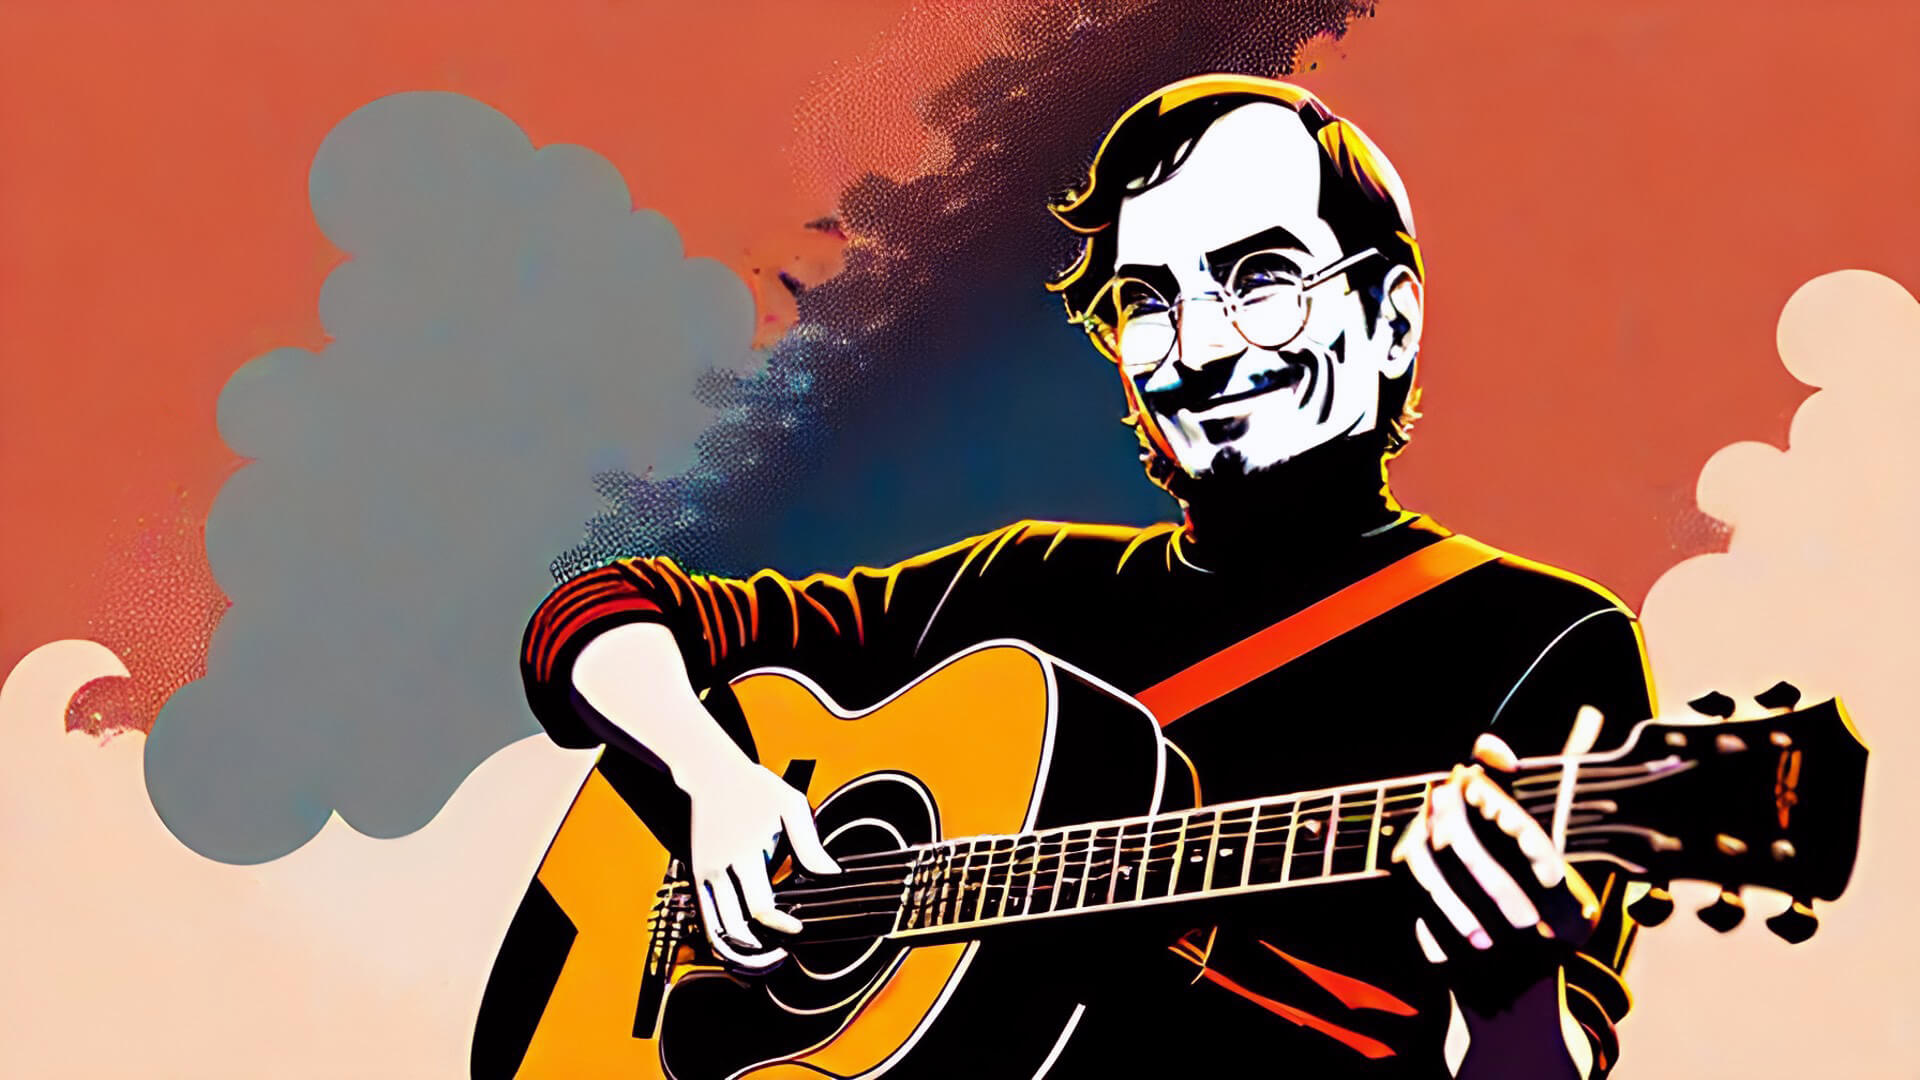 Steve Jobs playing guitar